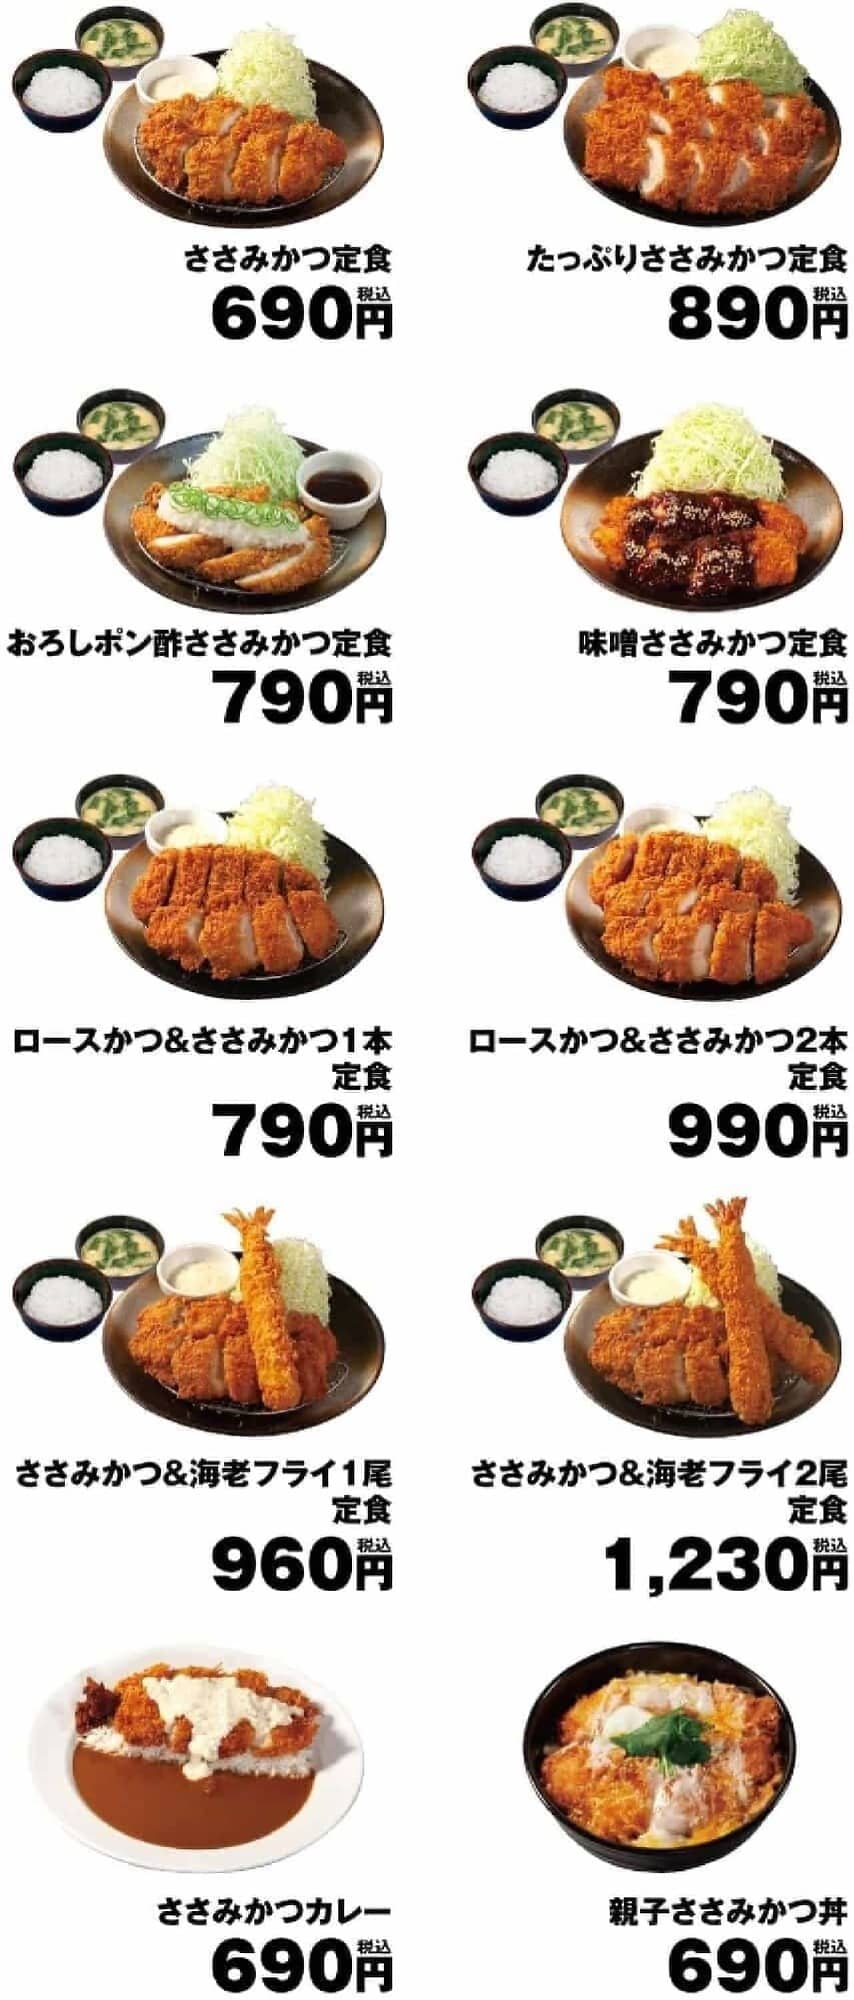 Matsunoya's "Sasami Katsu" is making a big comeback! A total of 11 products including "Sasami Katsu Curry" will go on sale on November 2, 2022 at 3:00 p.m.